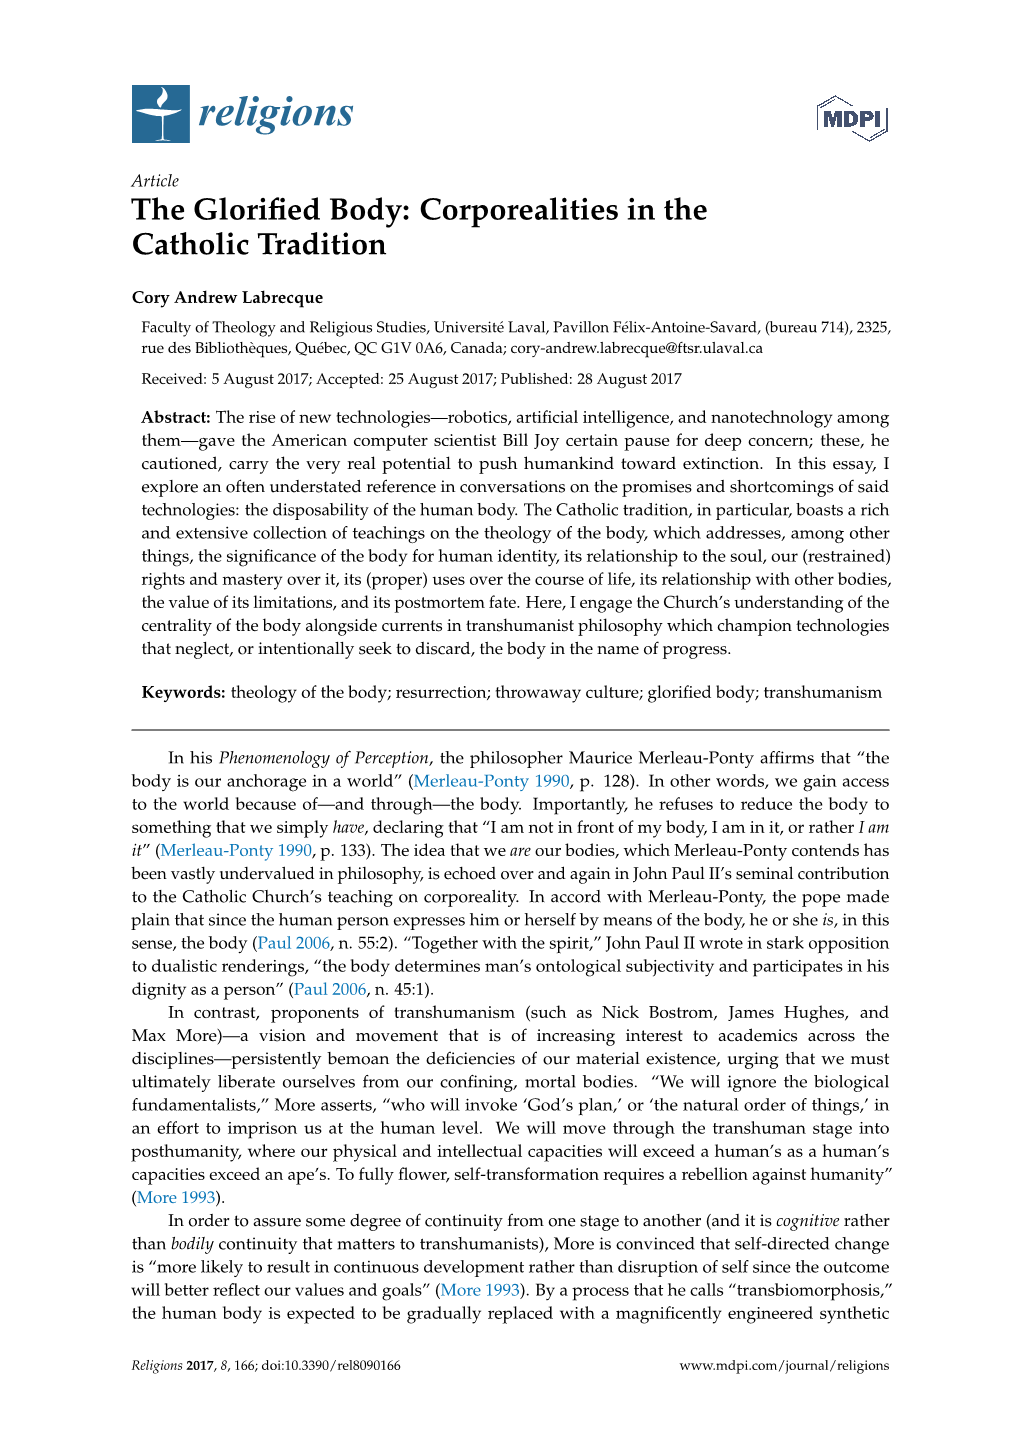 The Glorified Body: Corporealities in the Catholic Tradition